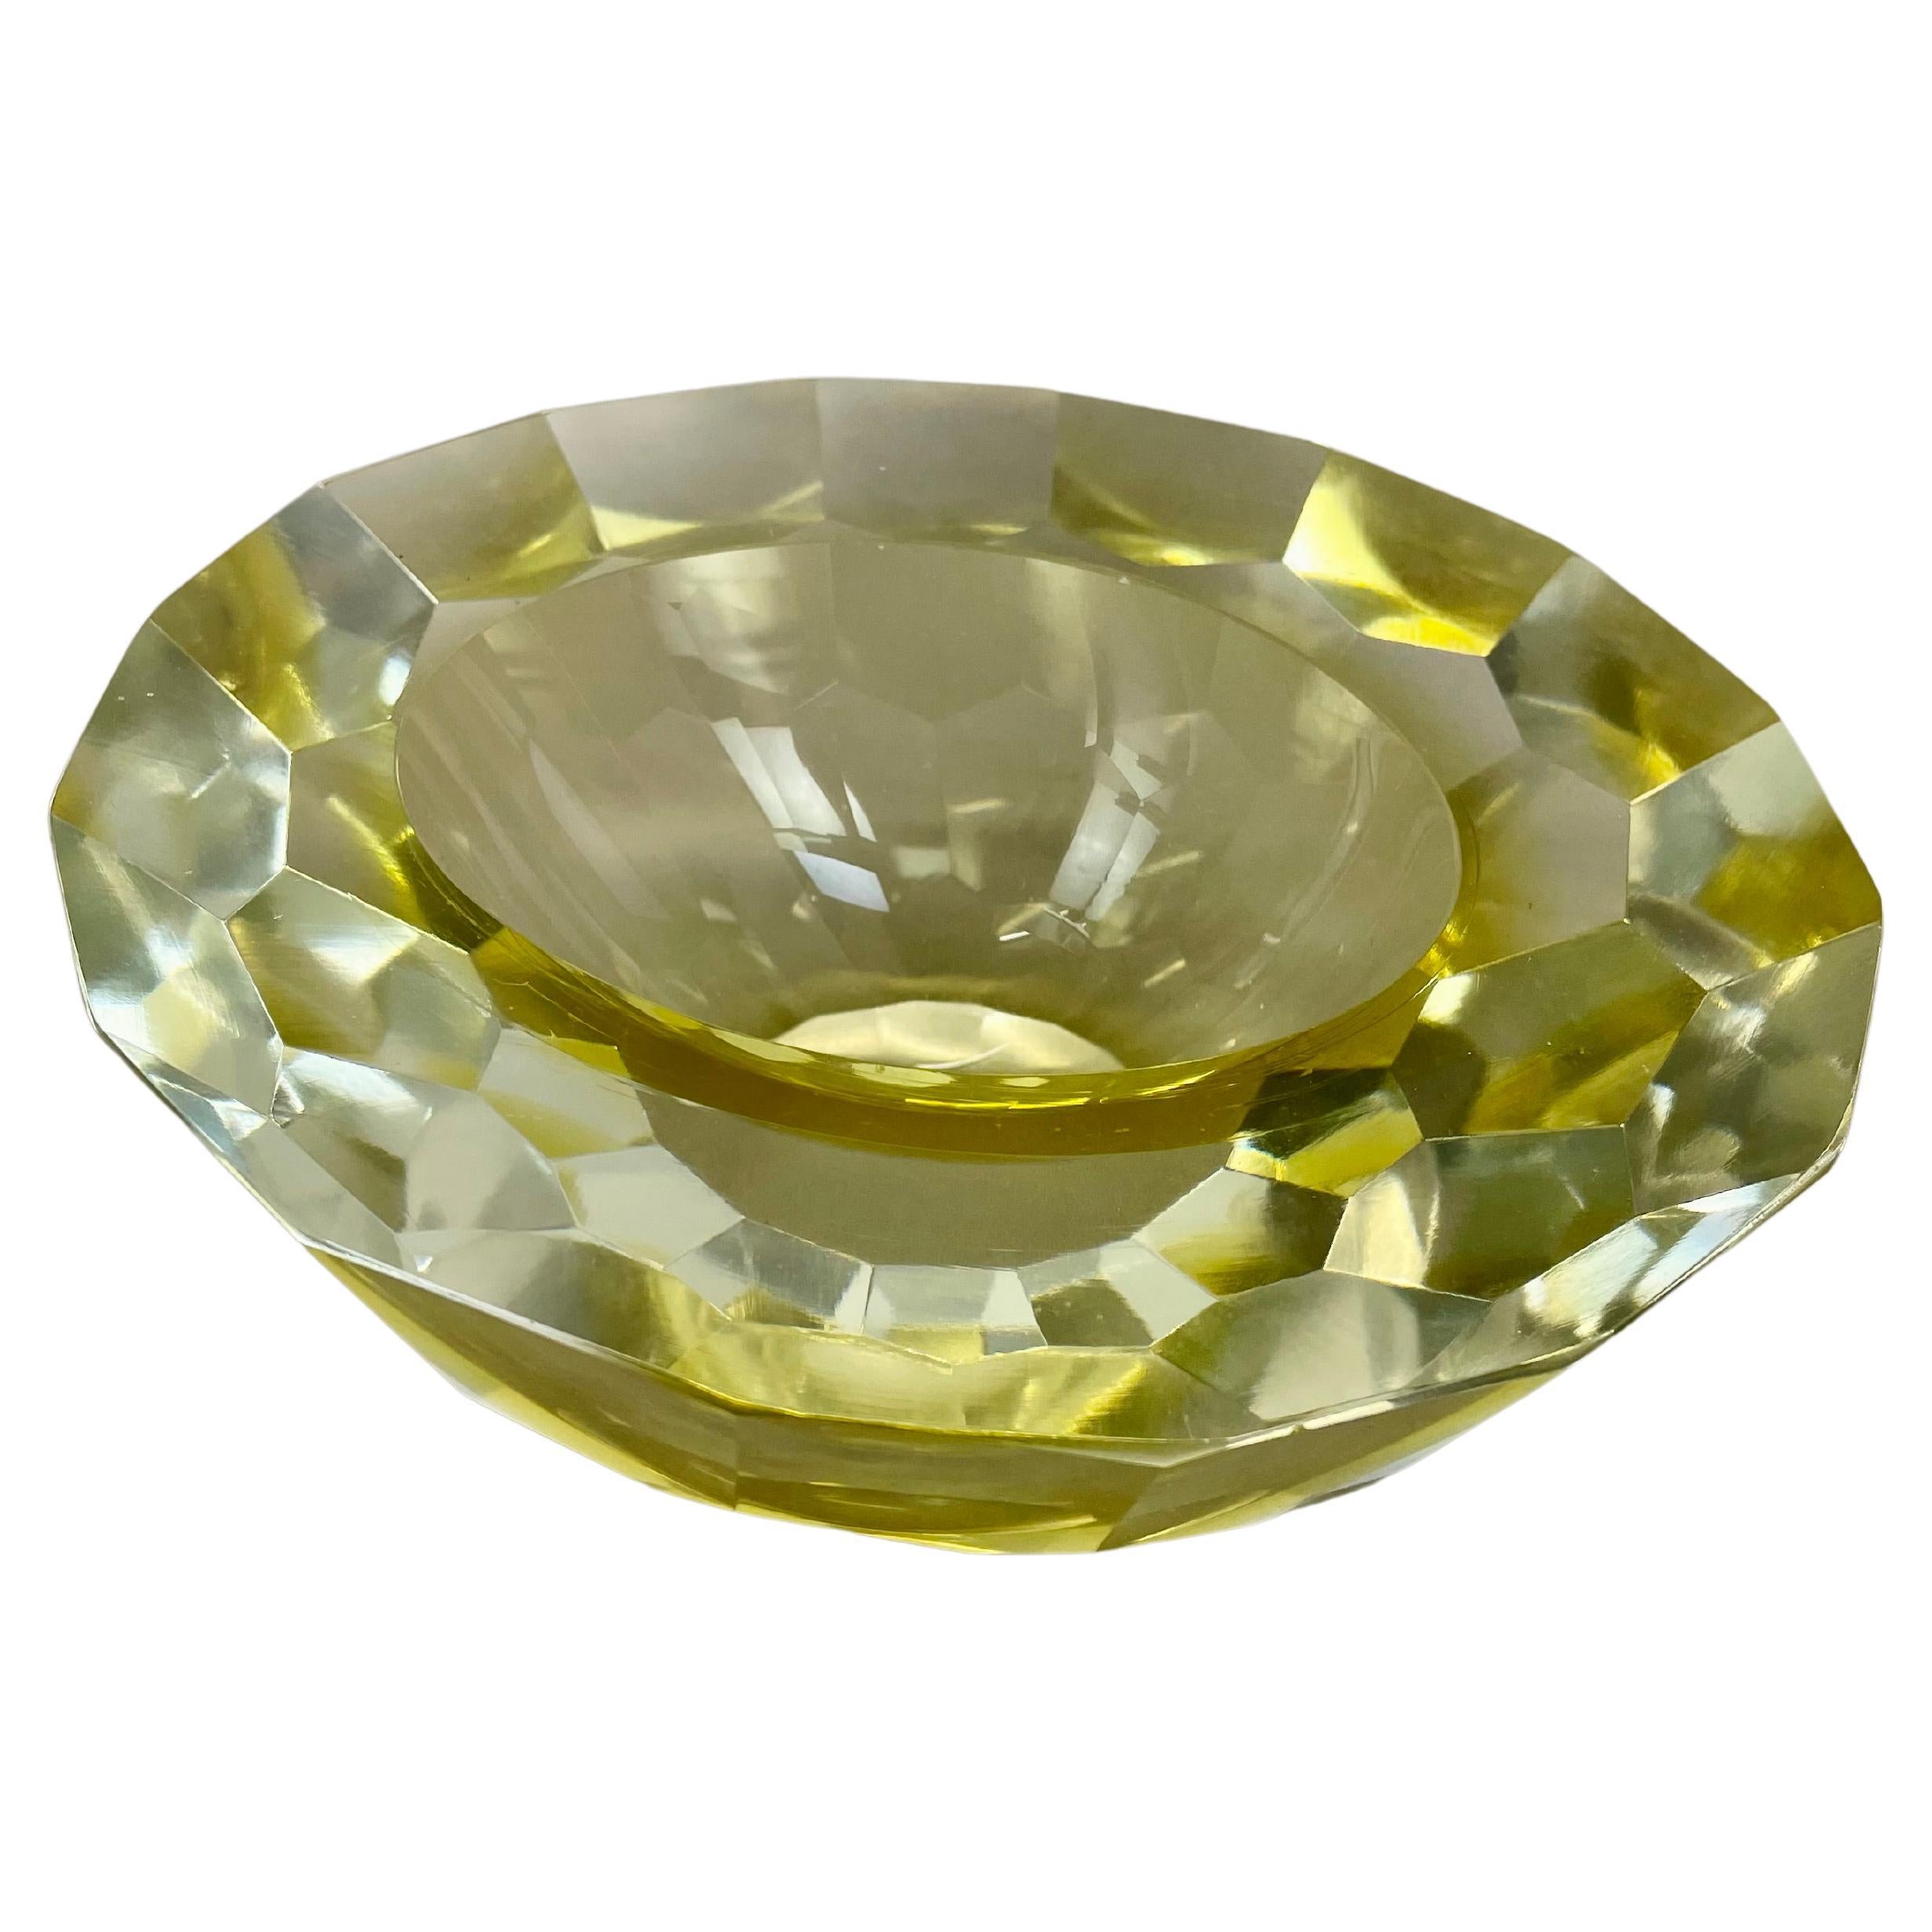 XL 2.4kg Murano Glass Sommerso yellow DIAMOND Bowl Flavio Poli, Italy, 1970s